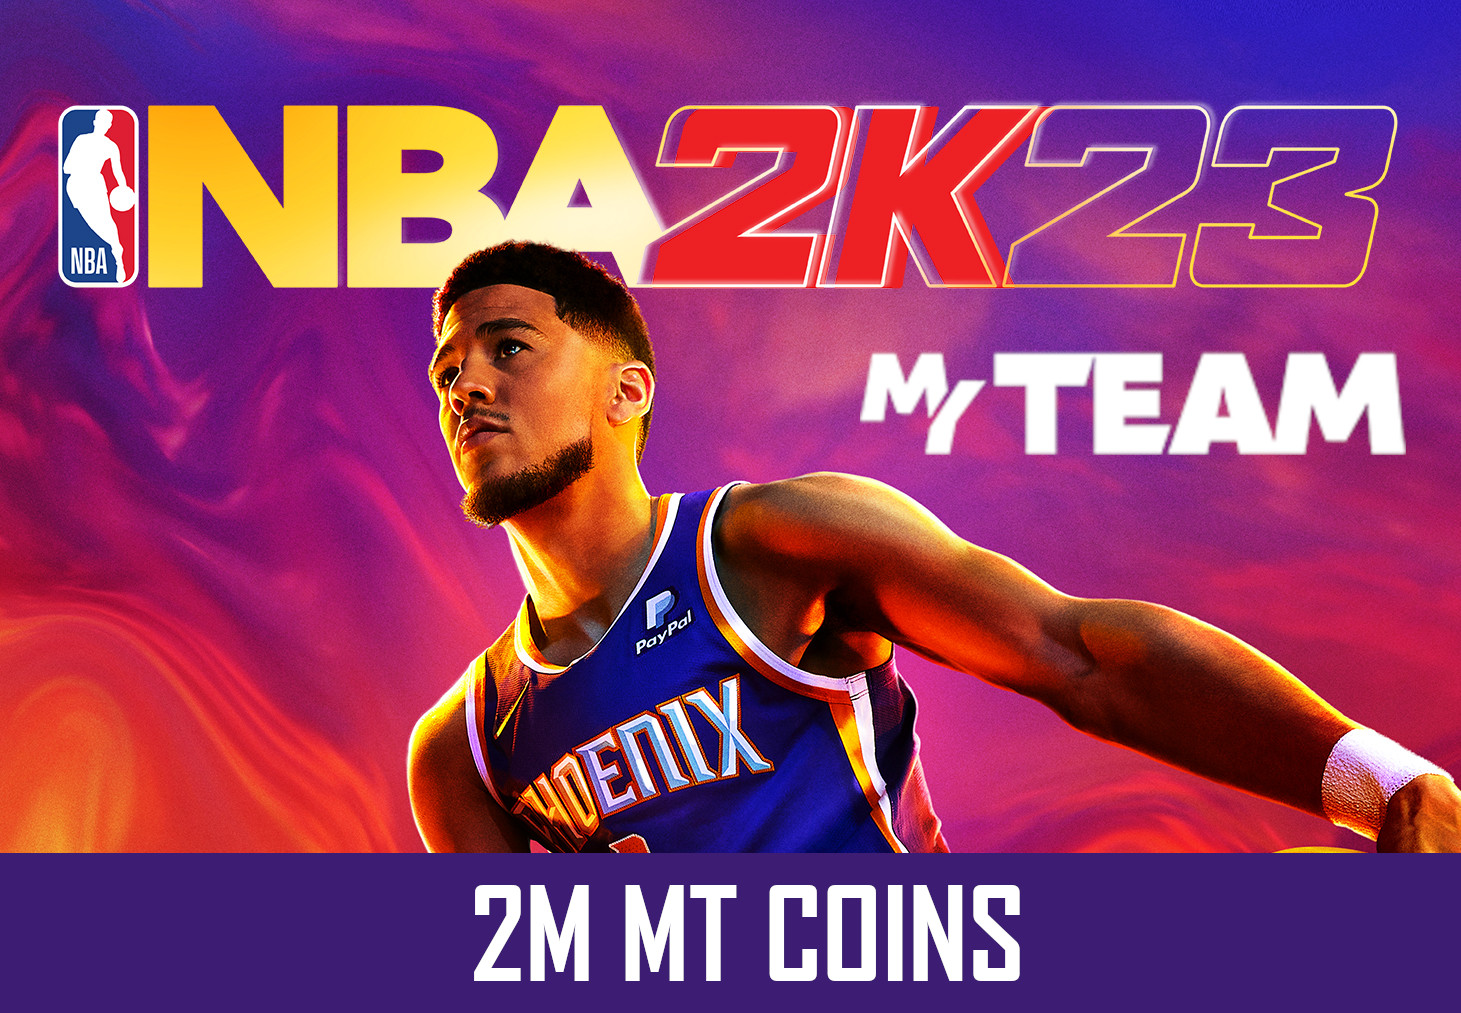 NBA 2K23 - 2M MT Coins - GLOBAL XBOX One/Series X,S